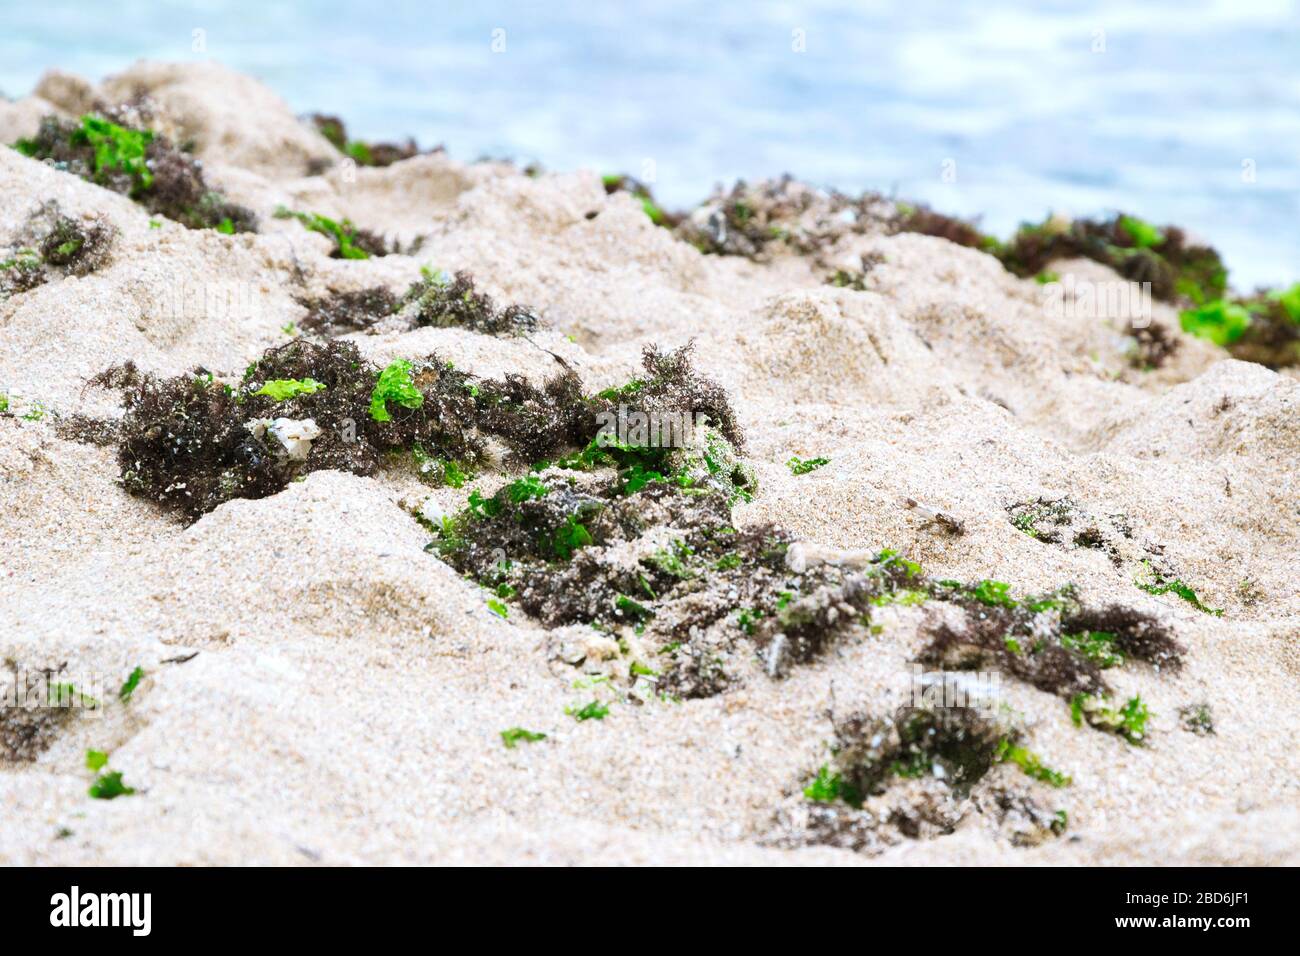 Green and brown seaweed on sandy beach near sea. Stock Photo